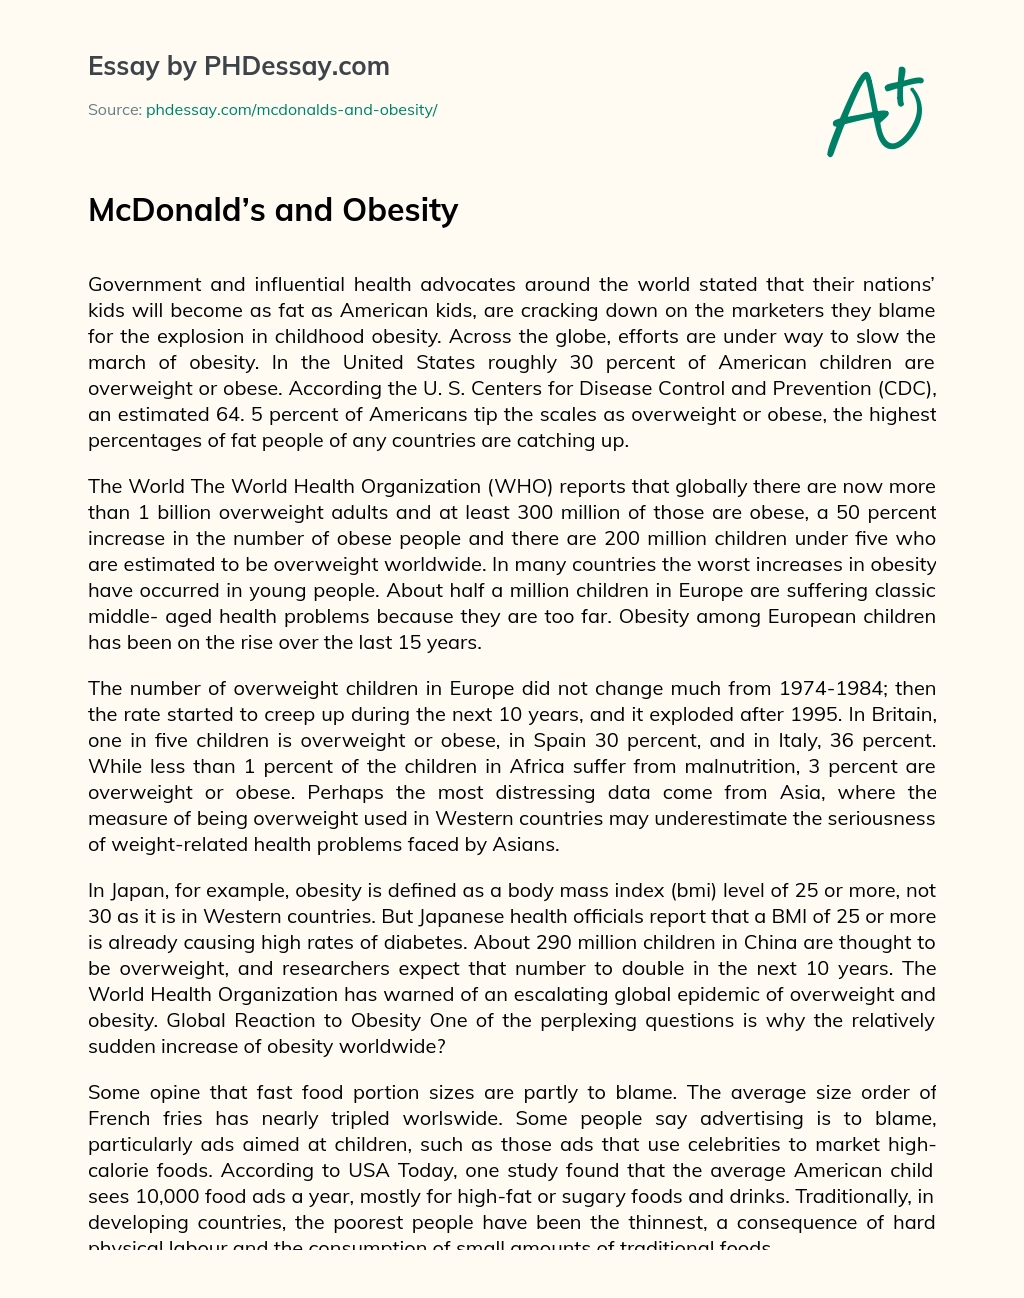 McDonald’s and Obesity essay